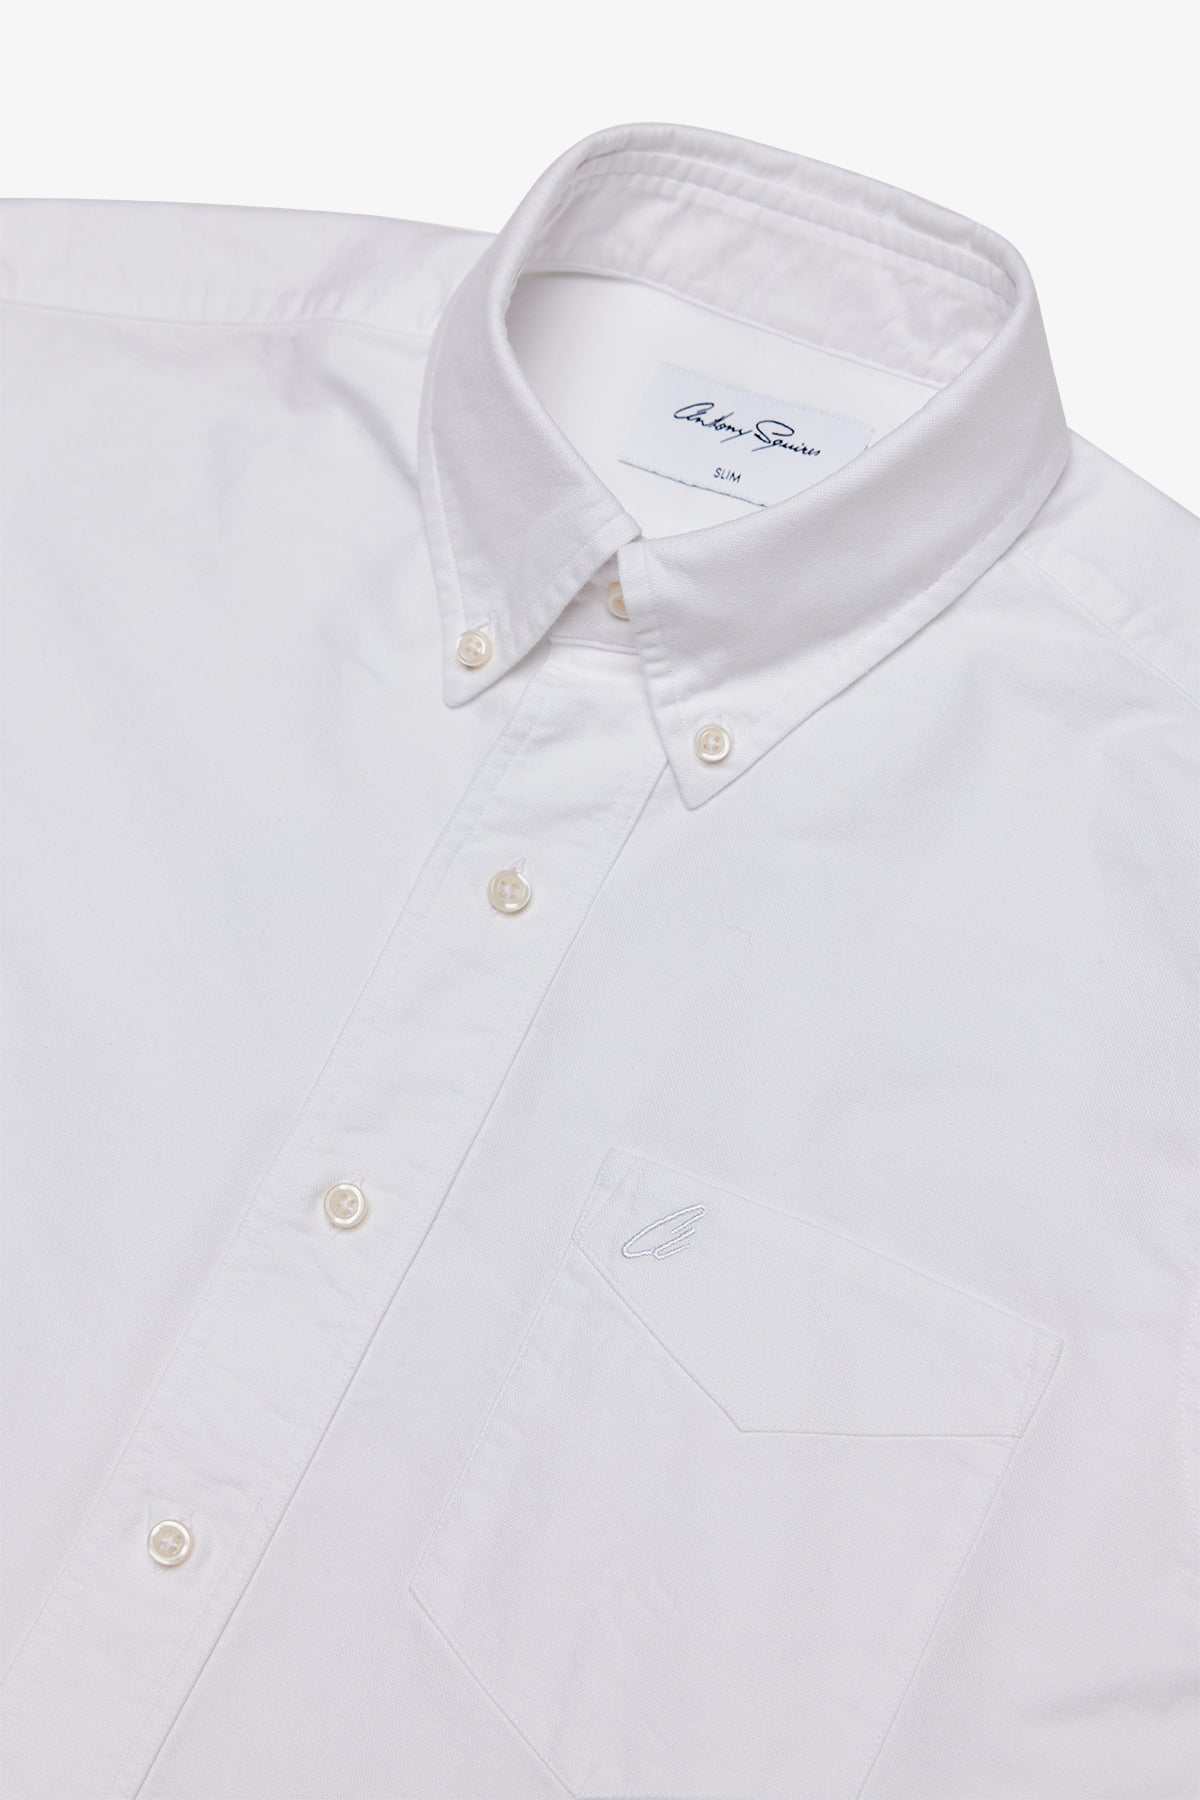 Alden - White Casual Shirt